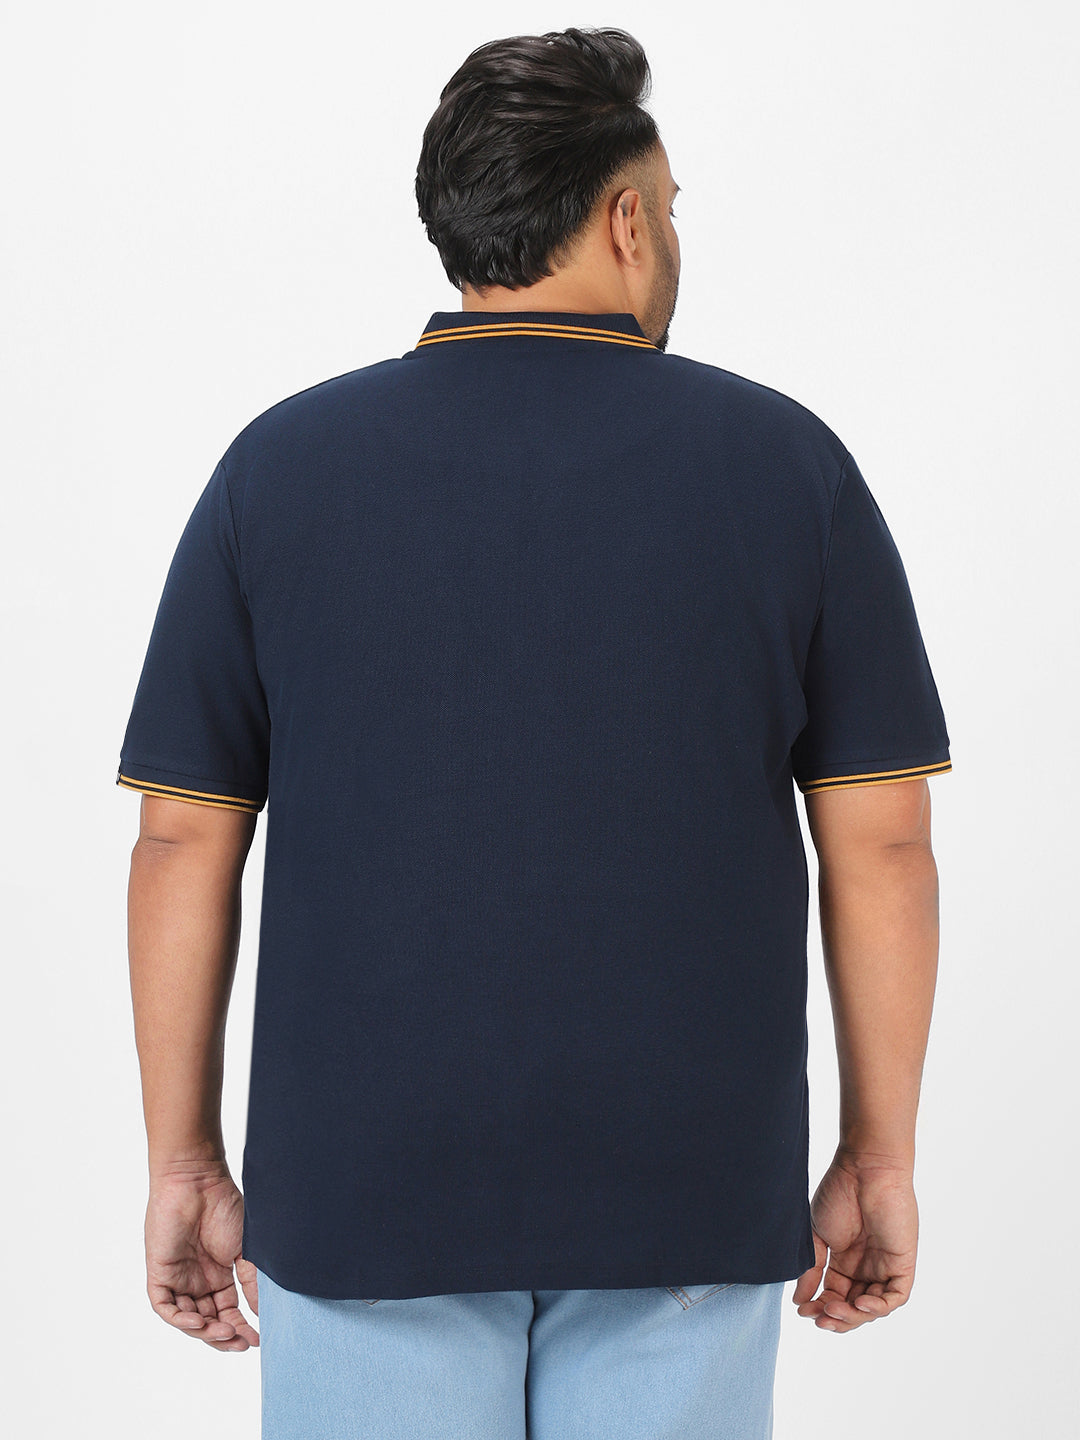 Plus Men's Navy Blue Solid Regular Fit Polo T-Shirt